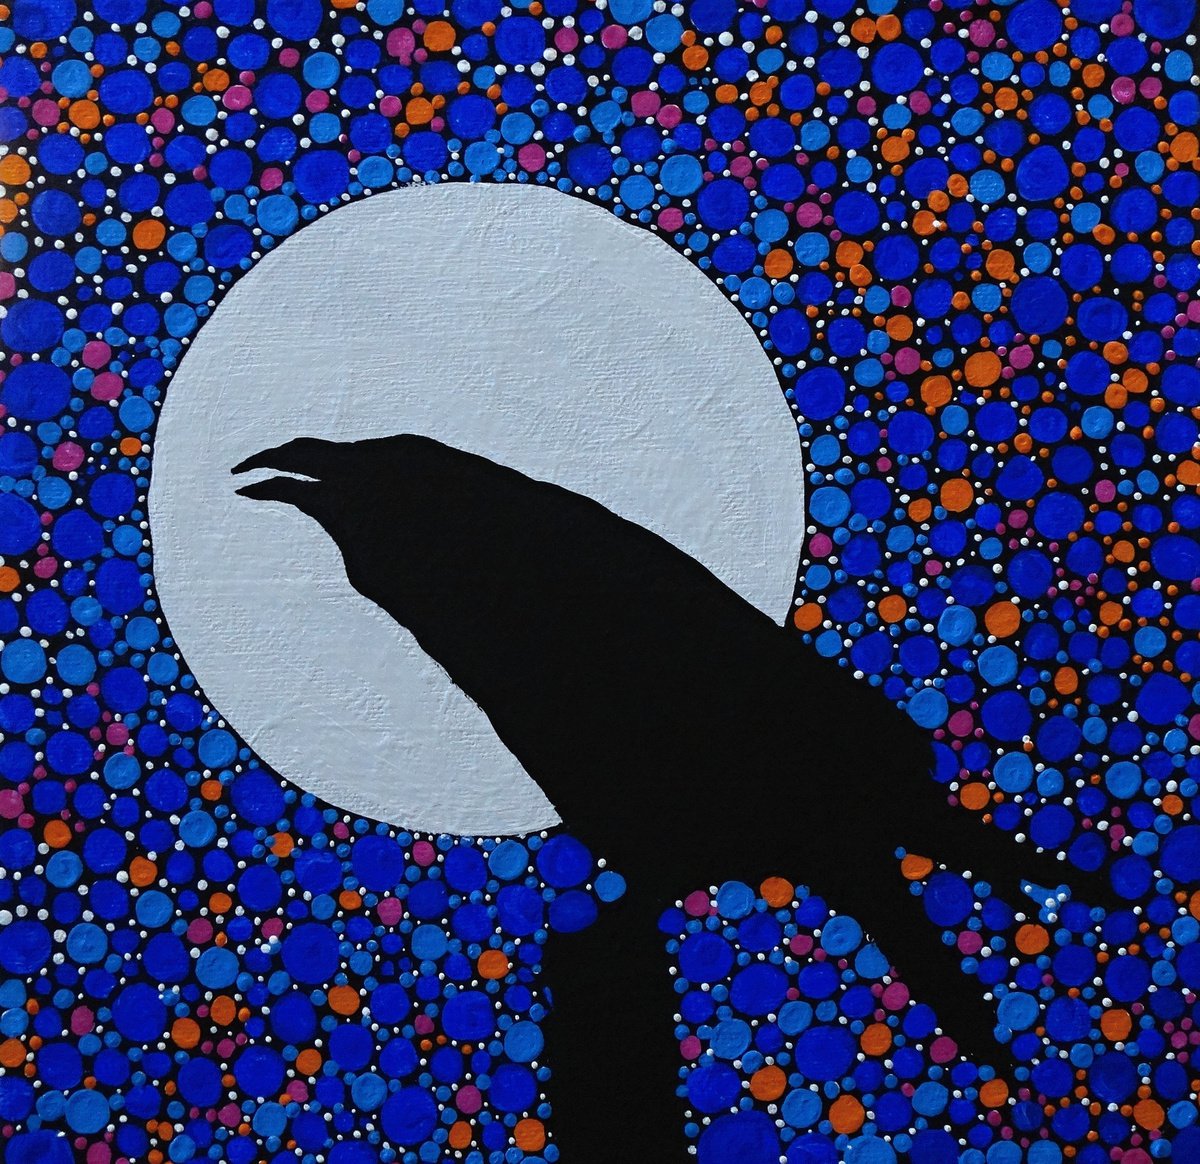 Ravens moon by Rachel Olynuk